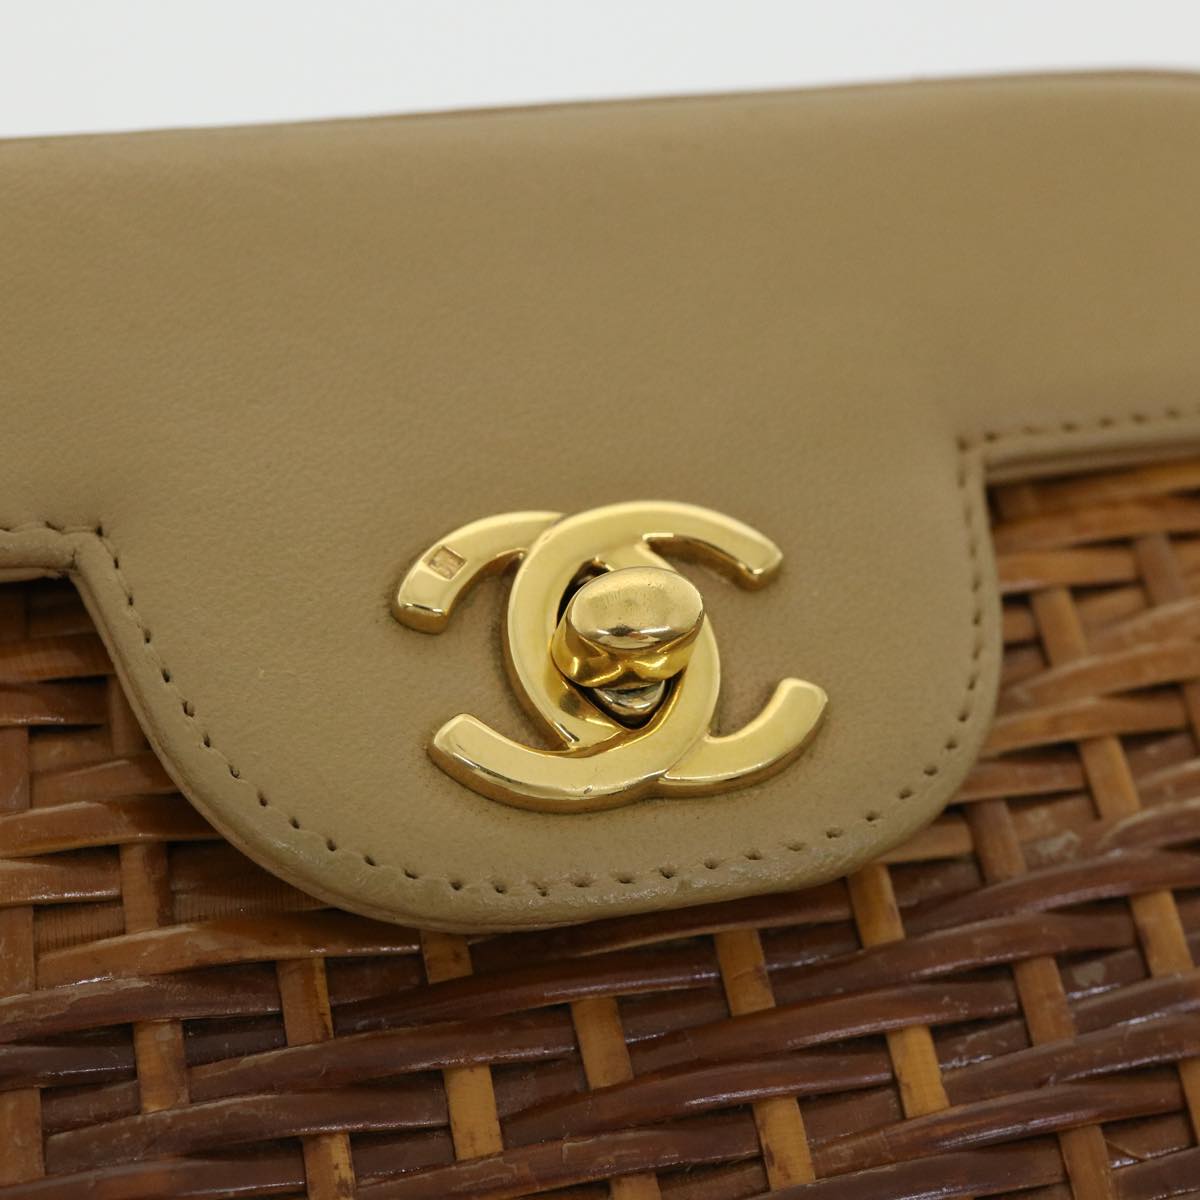 CHANEL Basket Chain Shoulder Bag Leather rattan Brown CC Auth 31896A